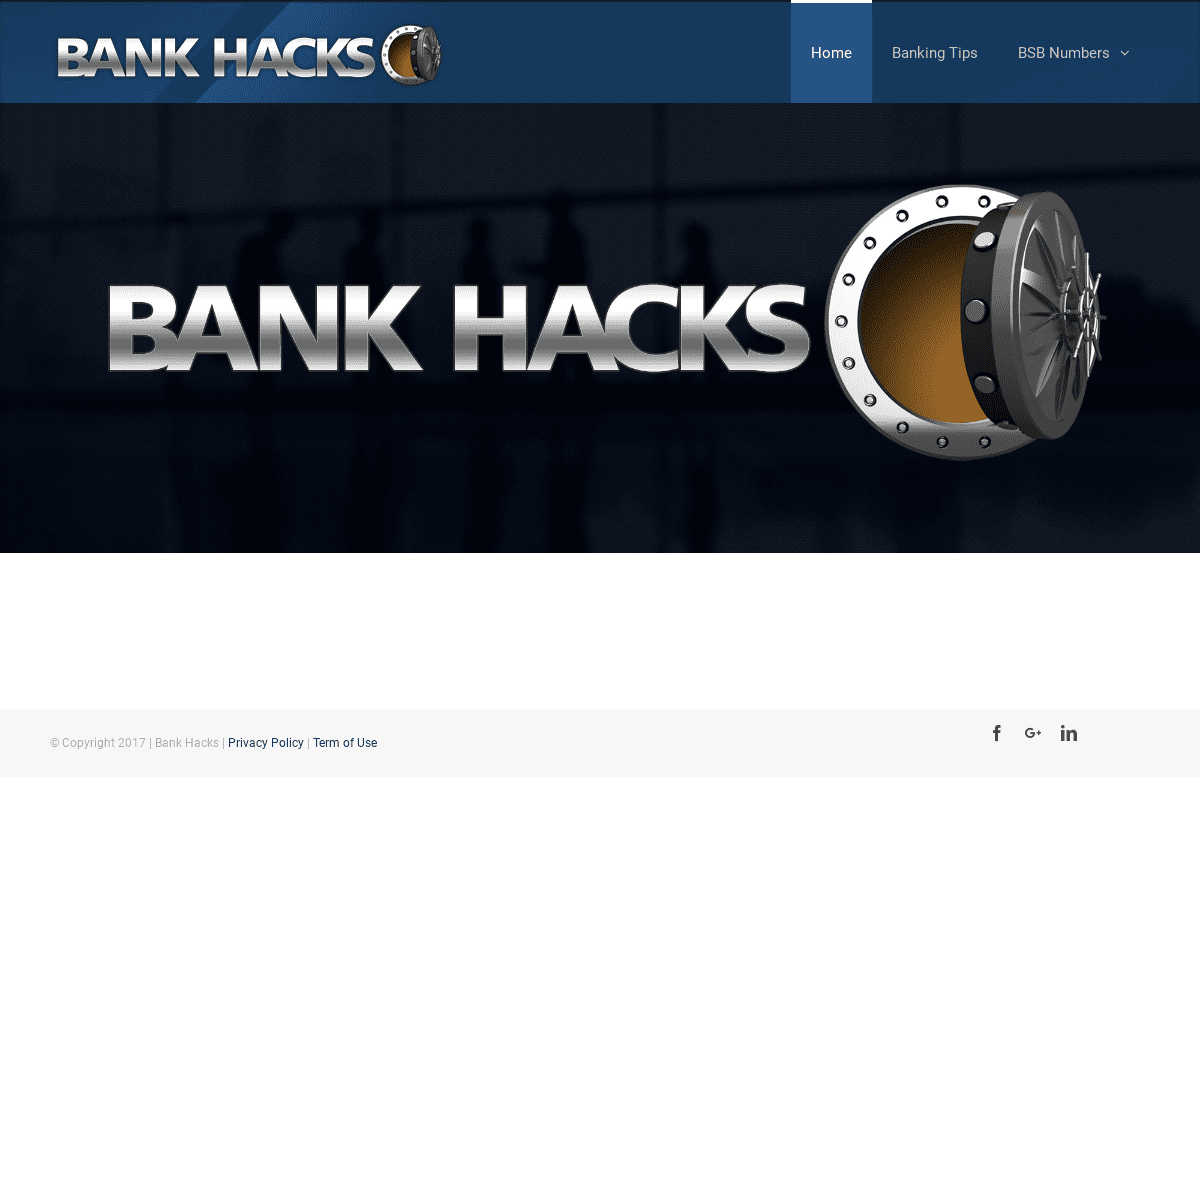 Home - Bank Hacks